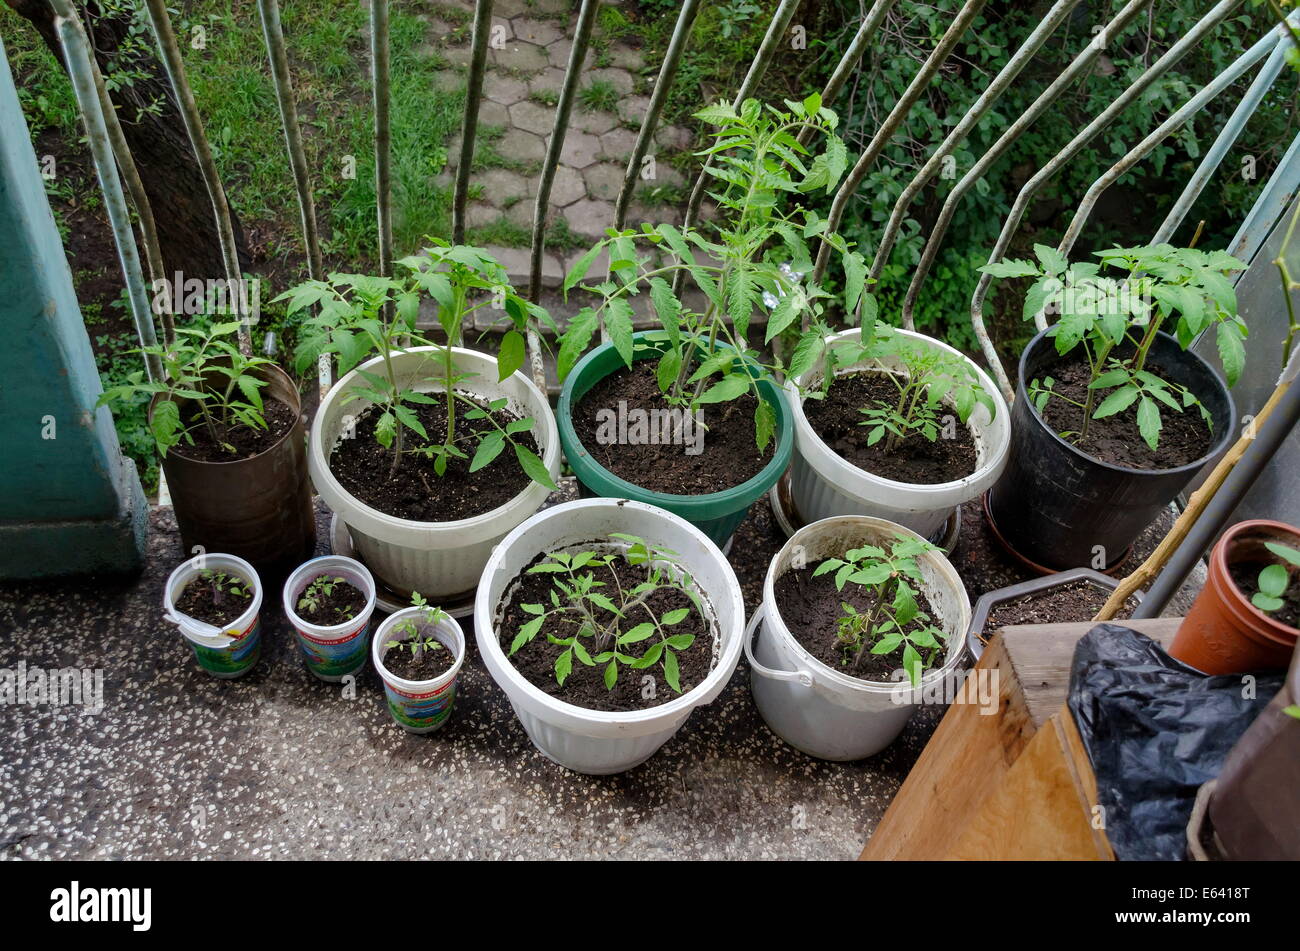 Tomato seedlings at balcony garden in apartment Stock Photo